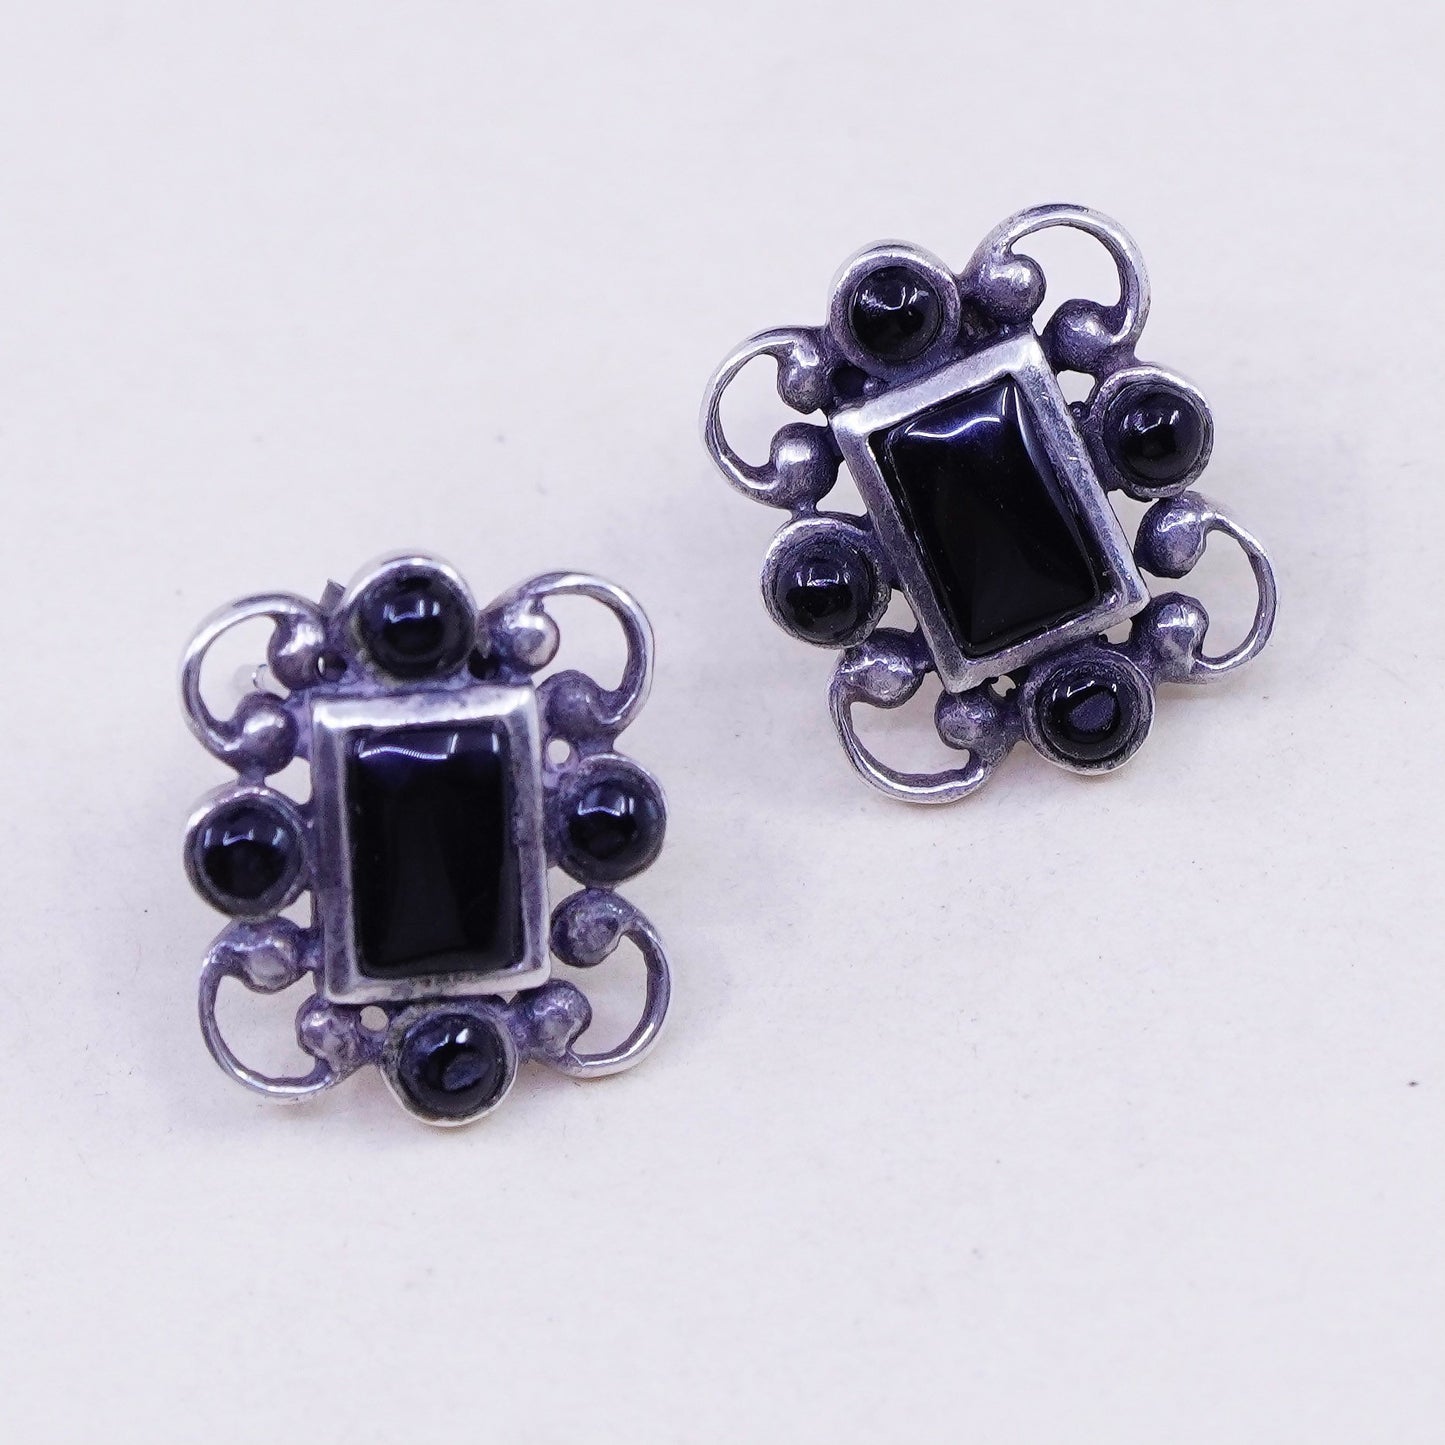 Vintage sterling silver handmade earrings, 925 studs with obsidian